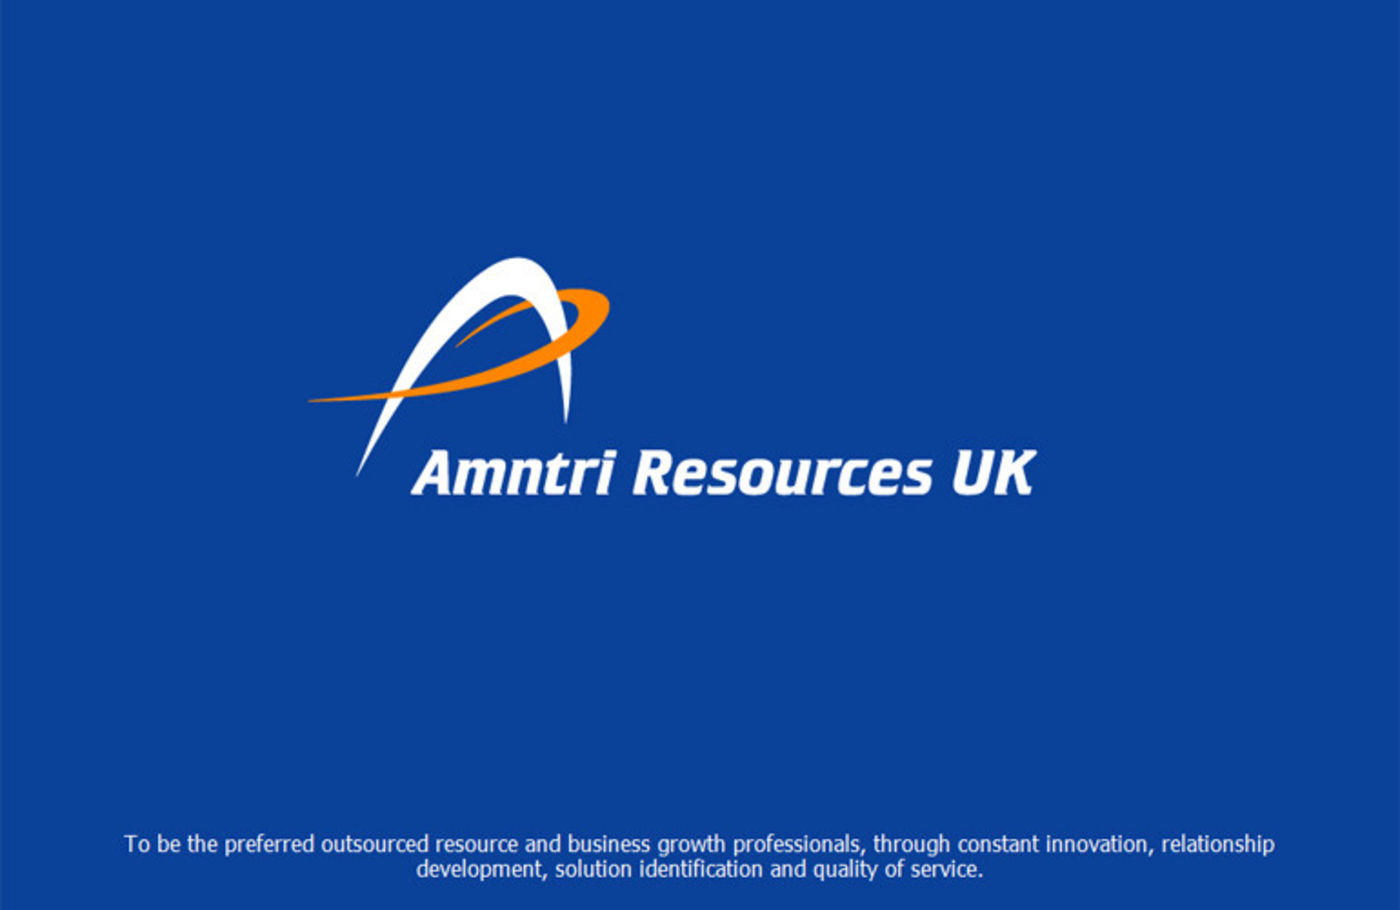 Amntri Resources UKF Welcome